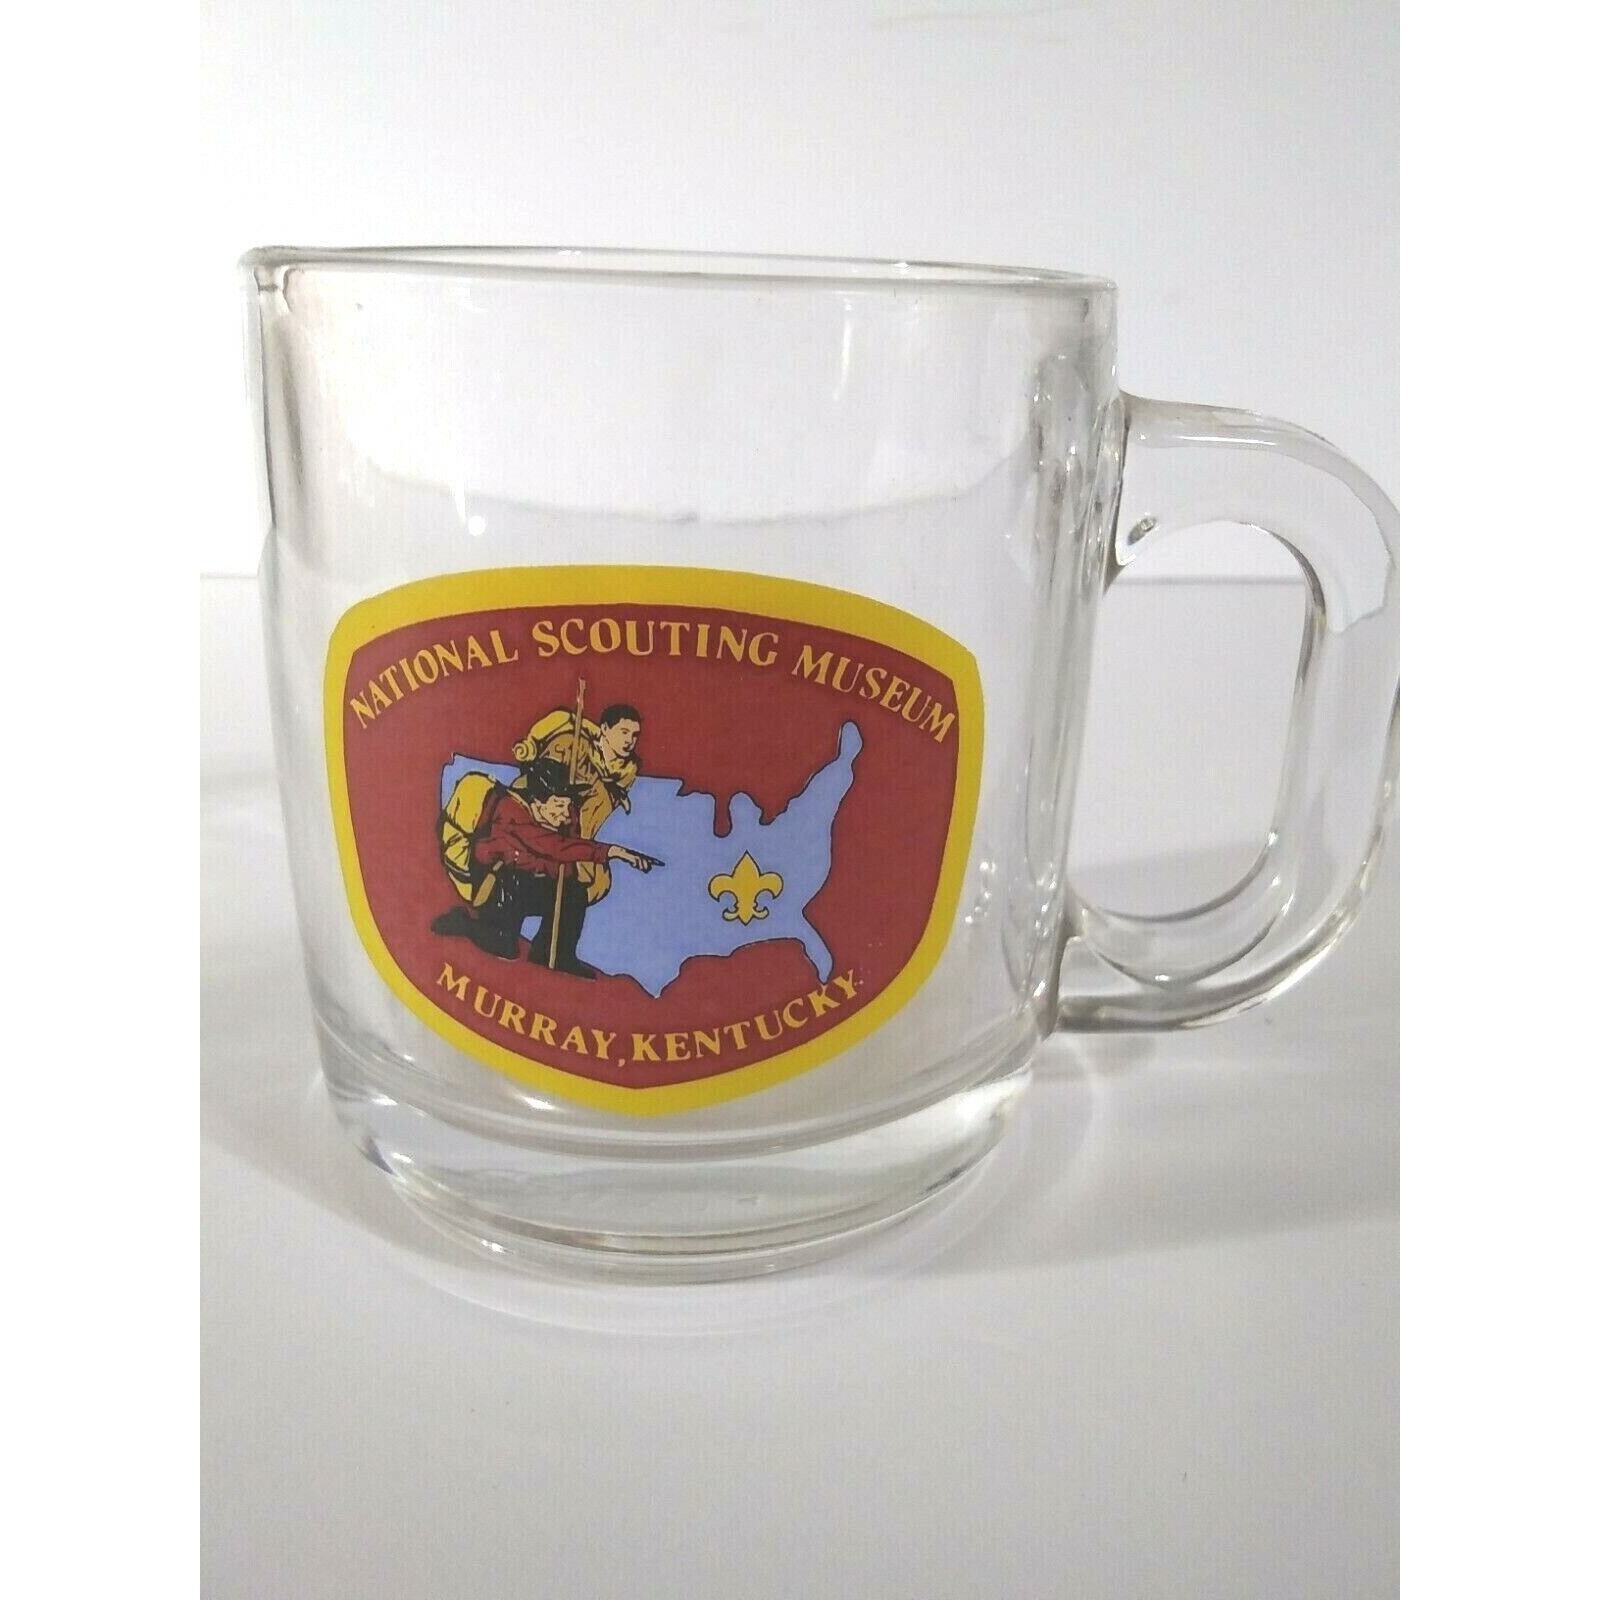 National Scouting Museum Murry Kentucky Boy Scout Coffee Cup Mug Clear Glass